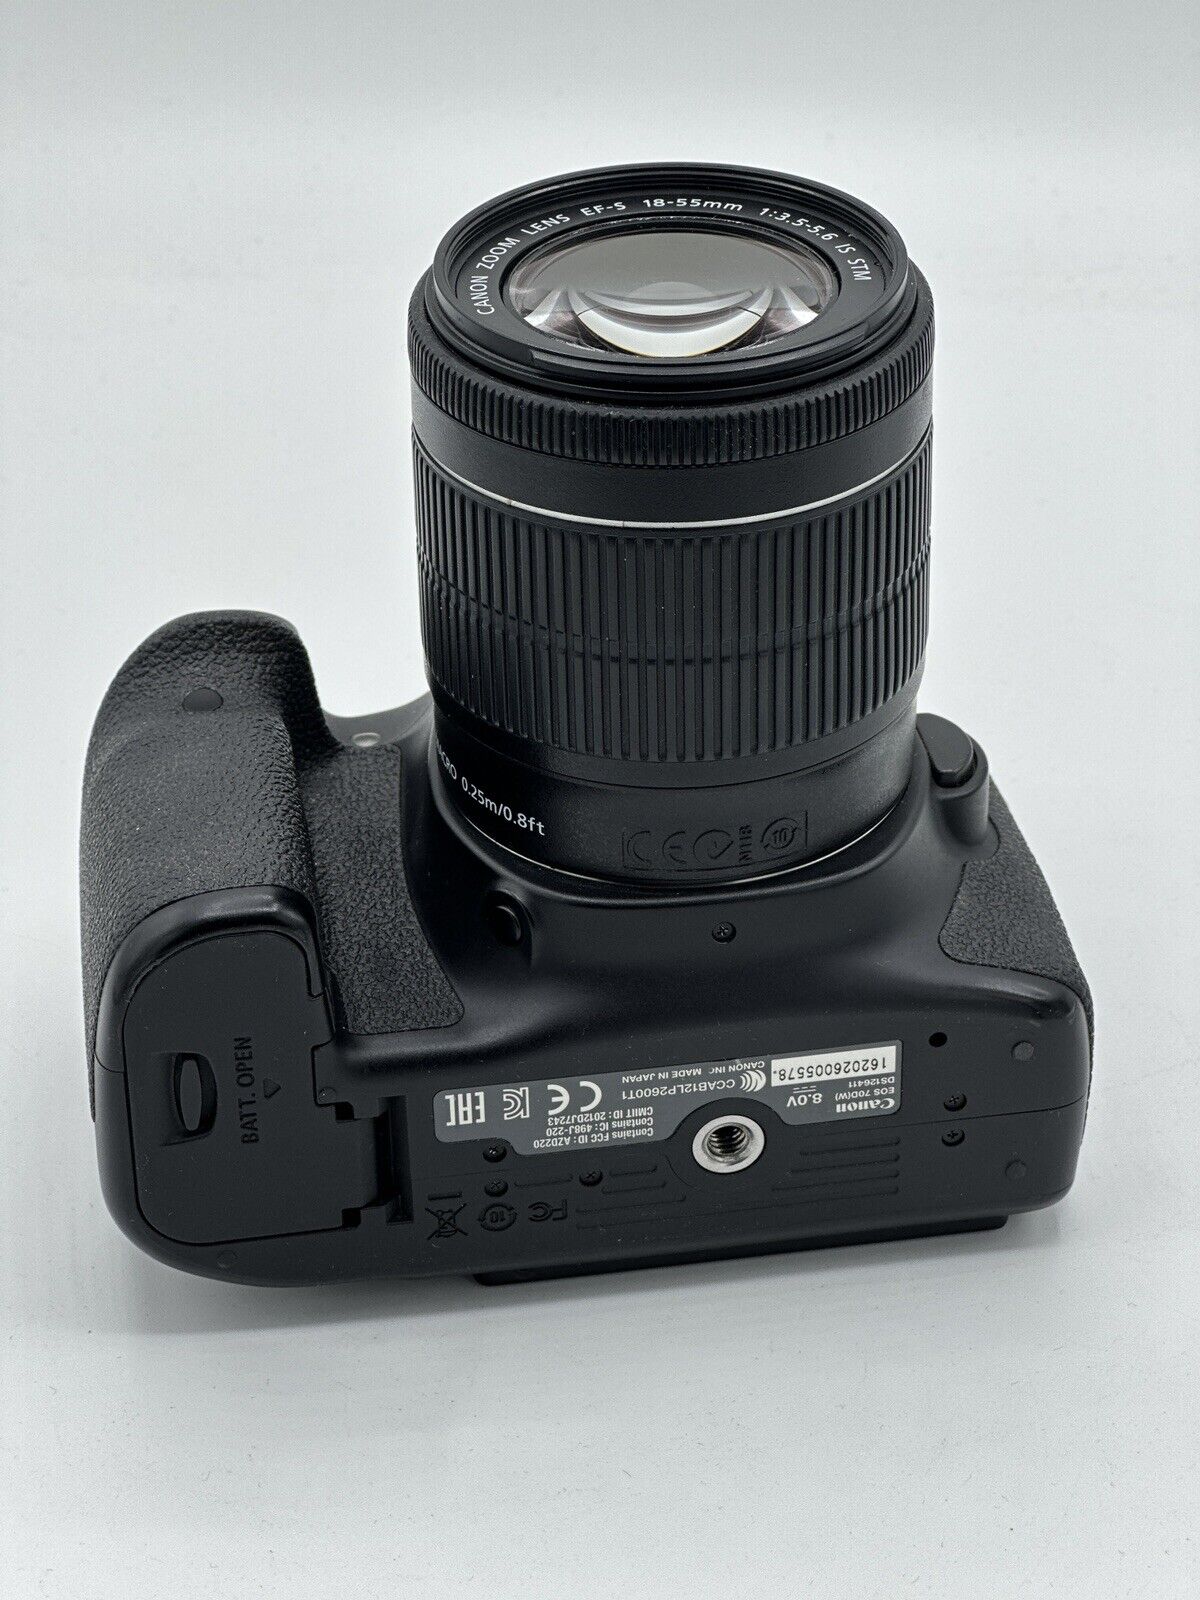 Canon EOS 70D 20.2MP Digital SLR Camera - Black (Kit w/ EF-S IS STM 18-55mm...